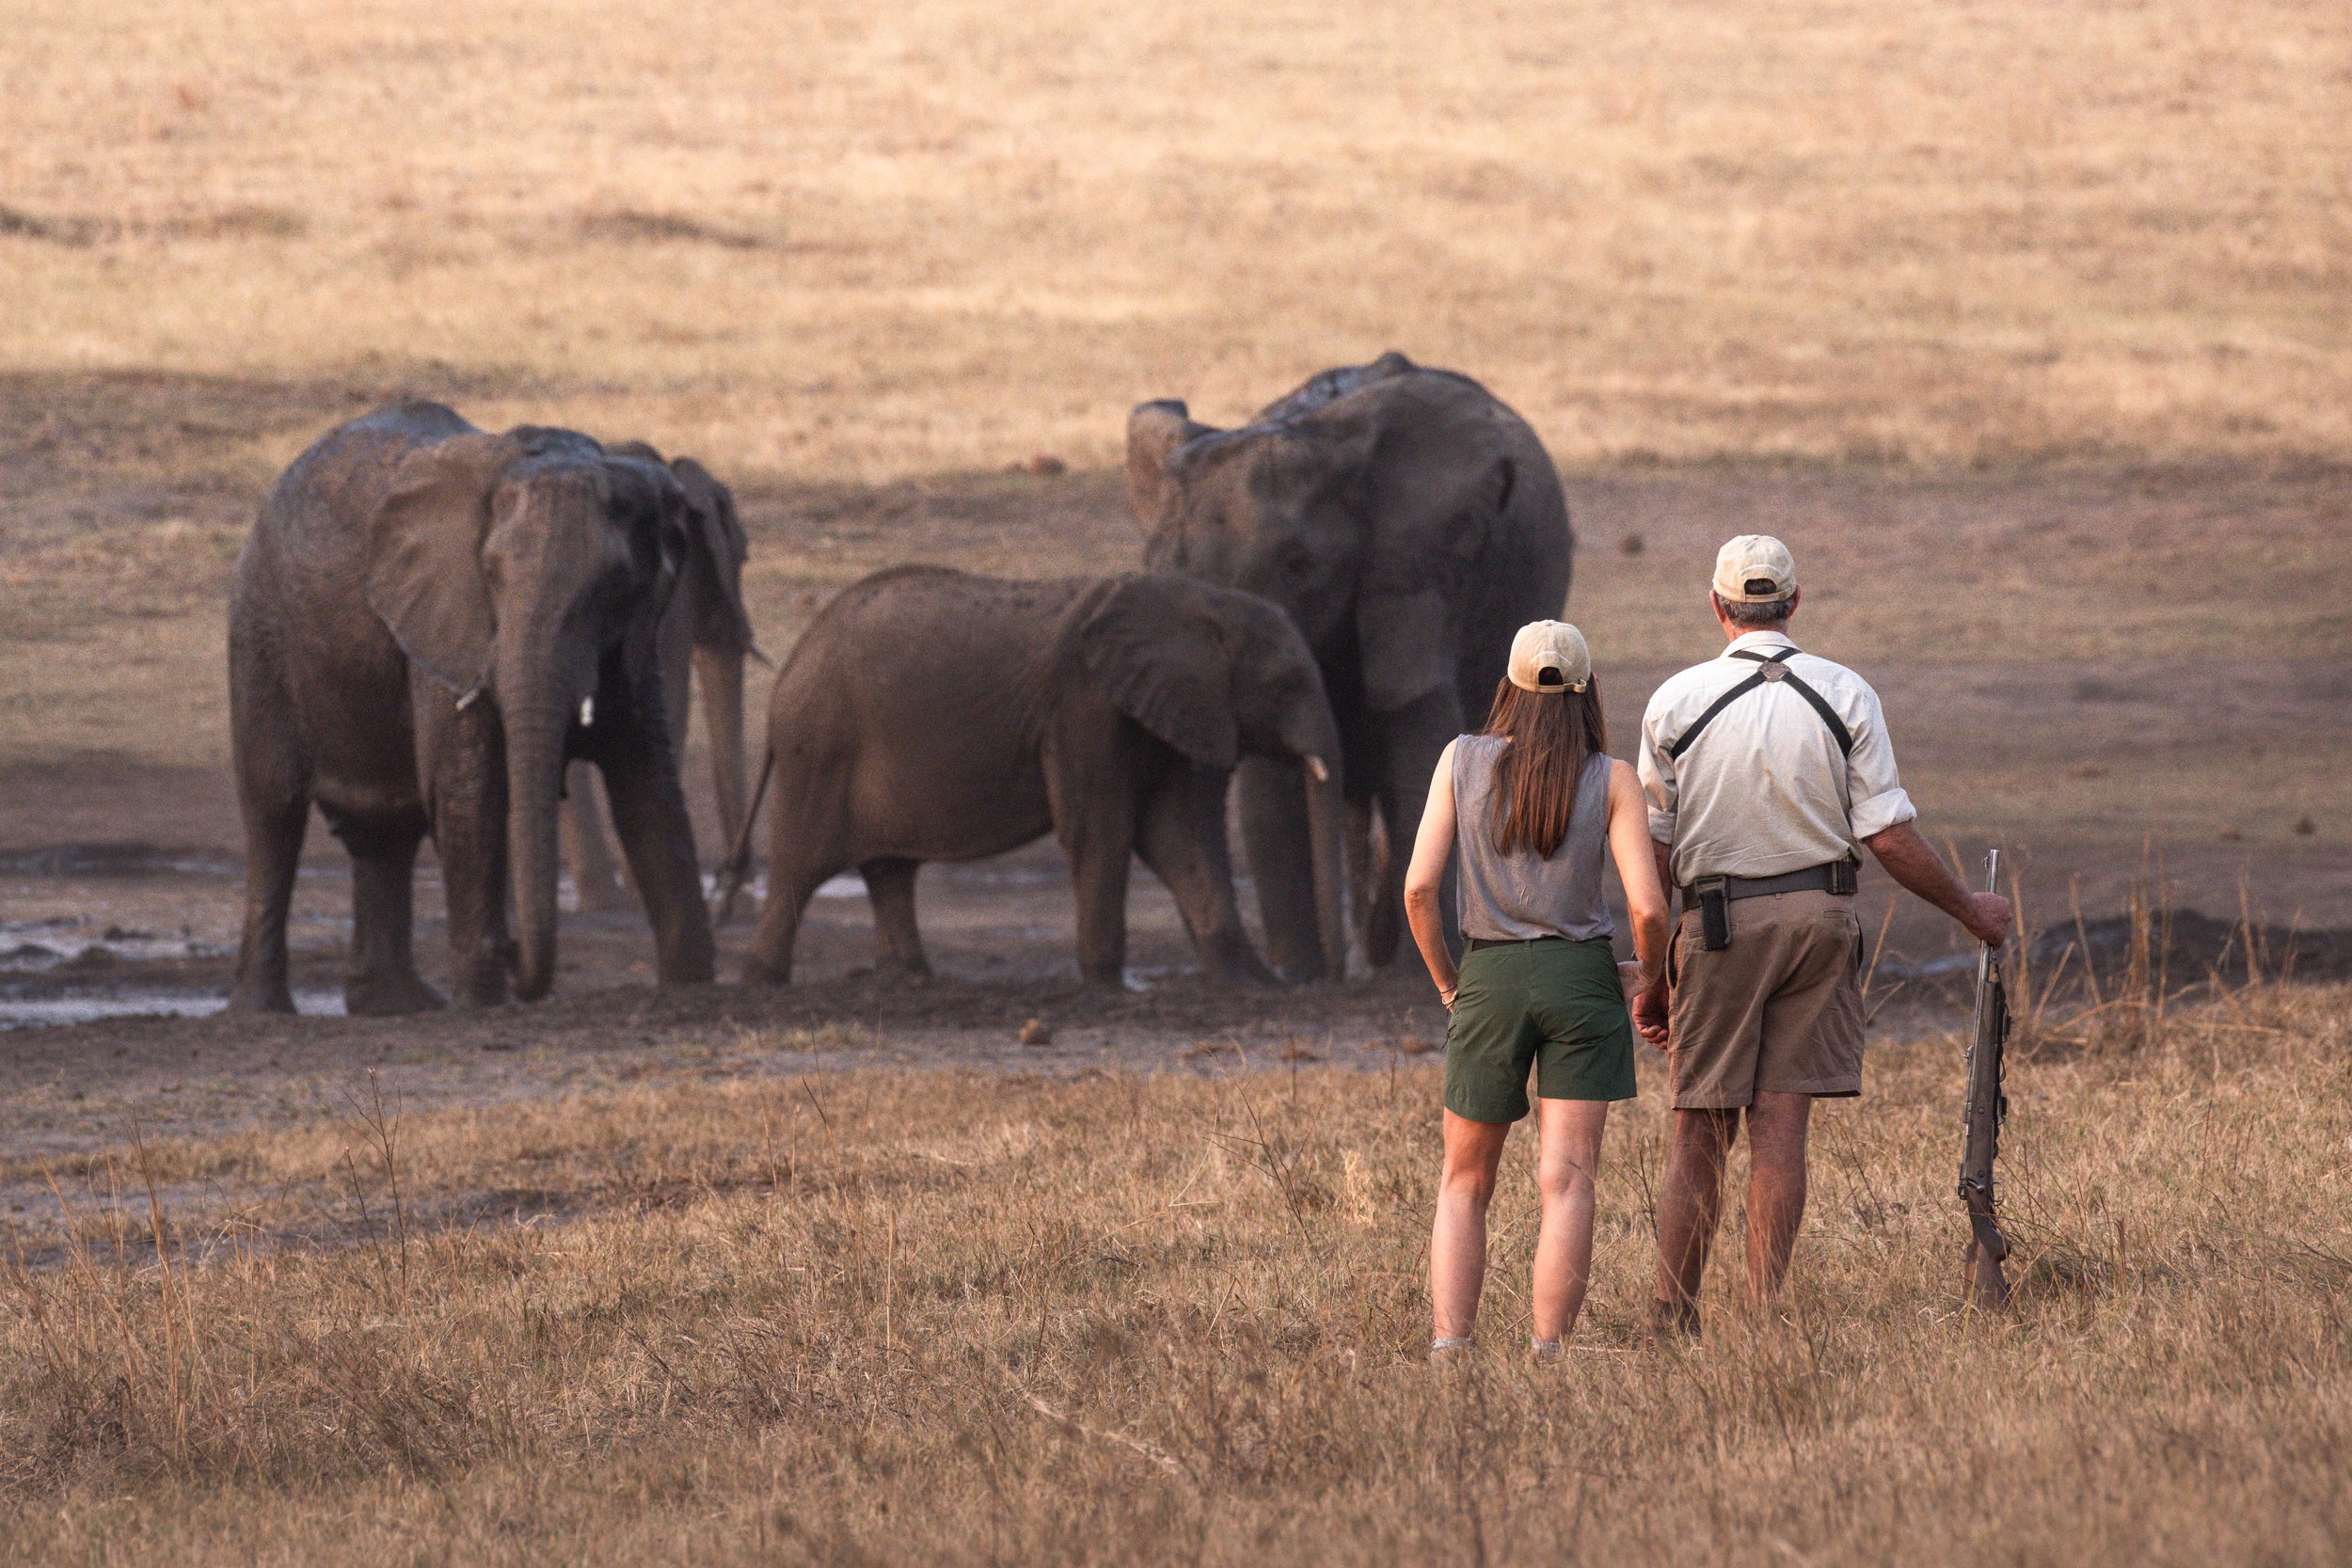 A couple standing near the elephants in Safari.